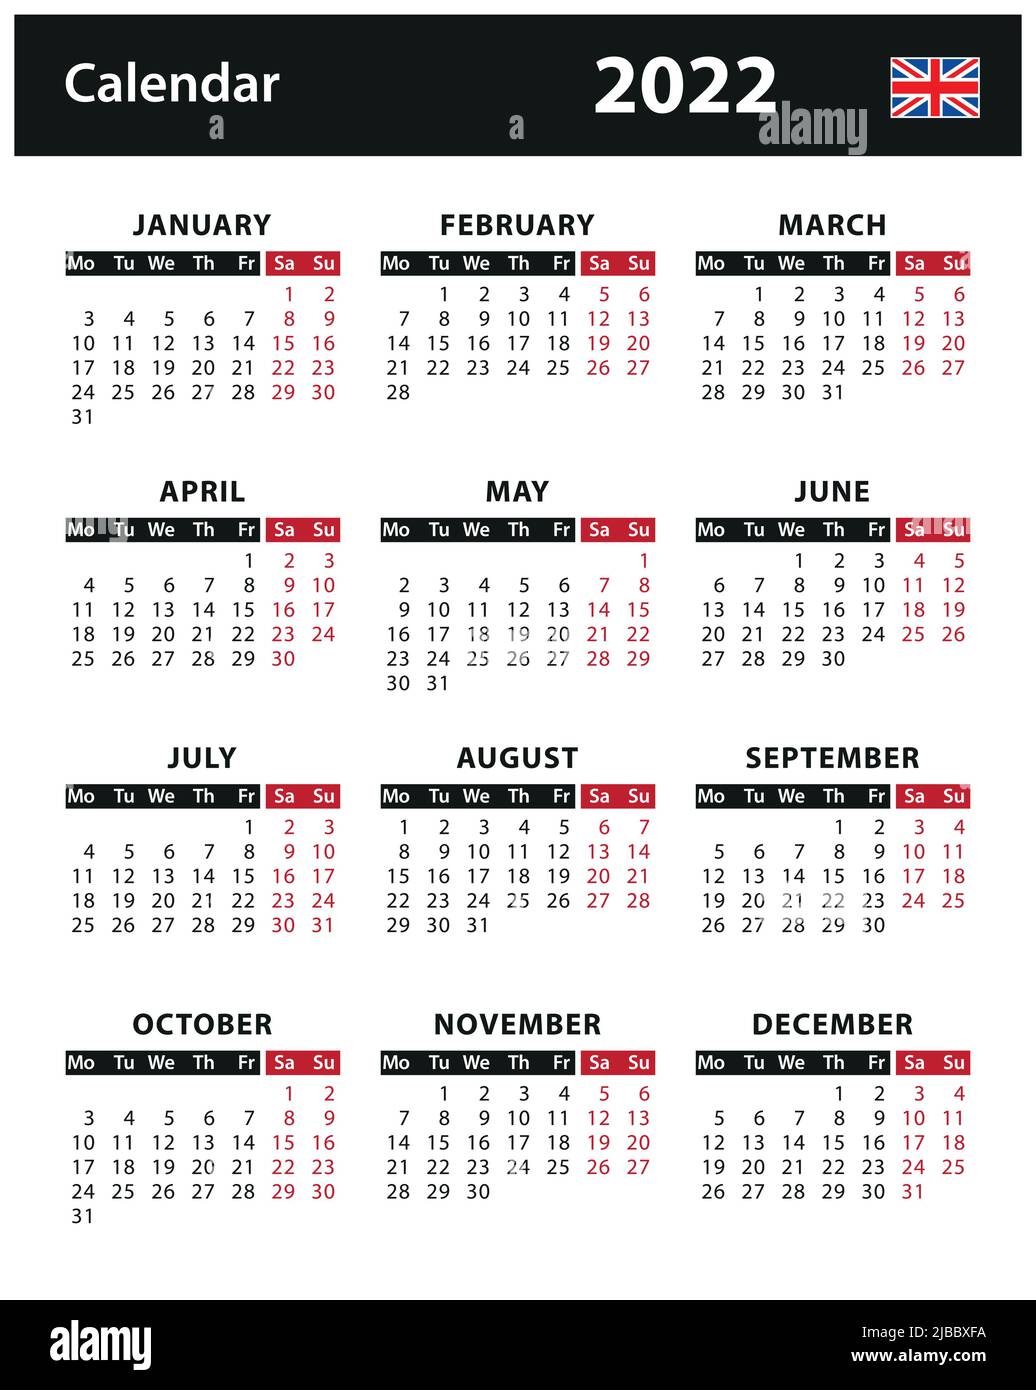 2022 Calendar - vector stock illustration. English version Stock Vector